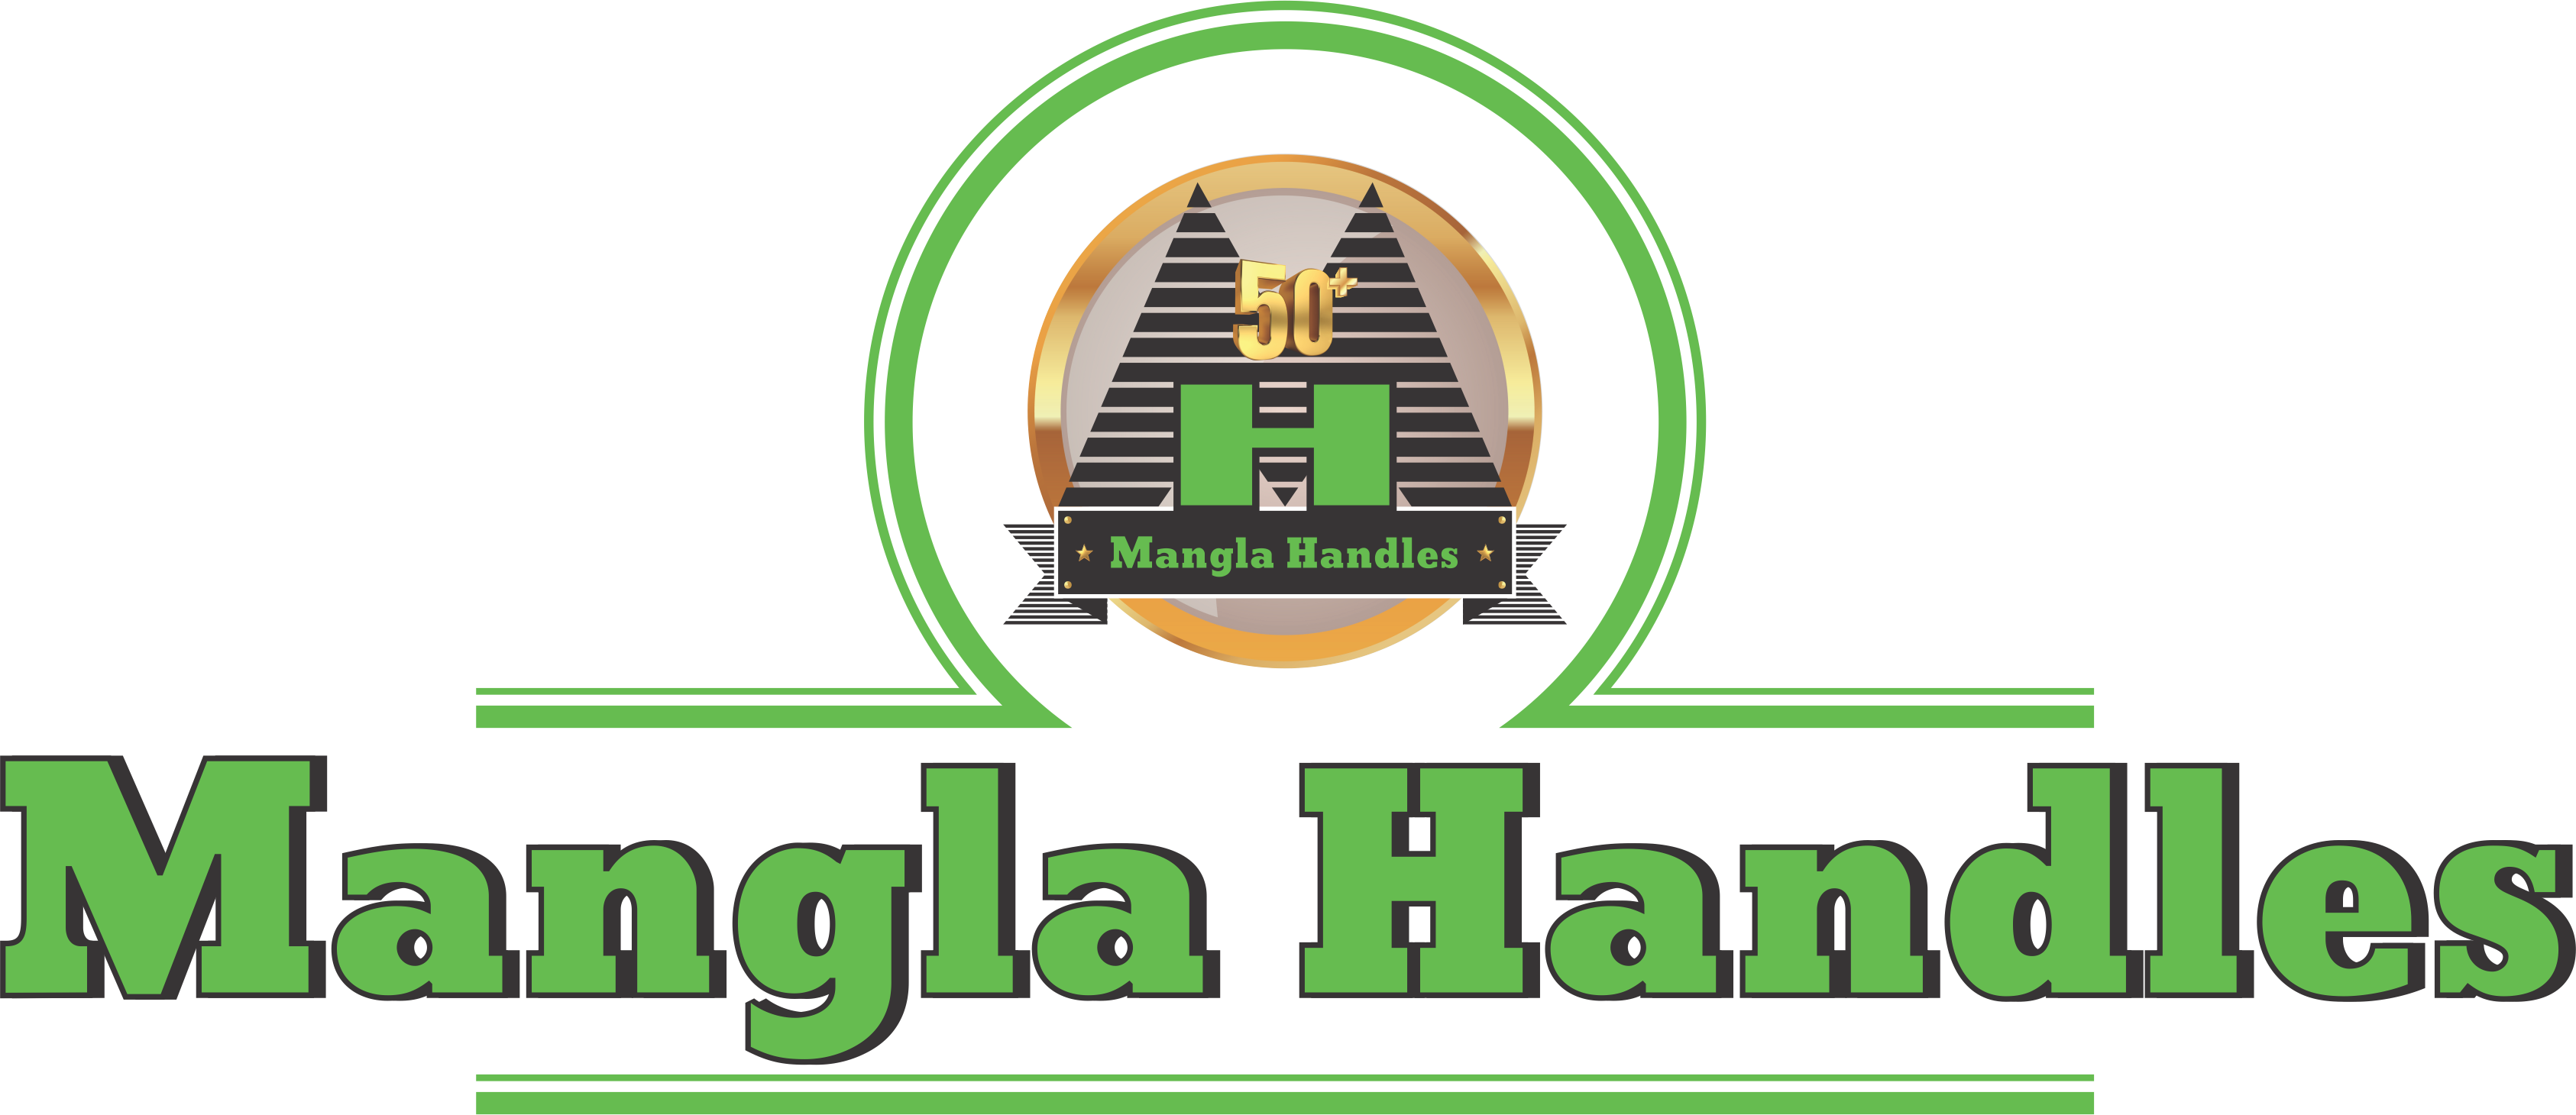 Mangla Handles, Delhi - Manufacturer of Bucket Handles and Container Handles